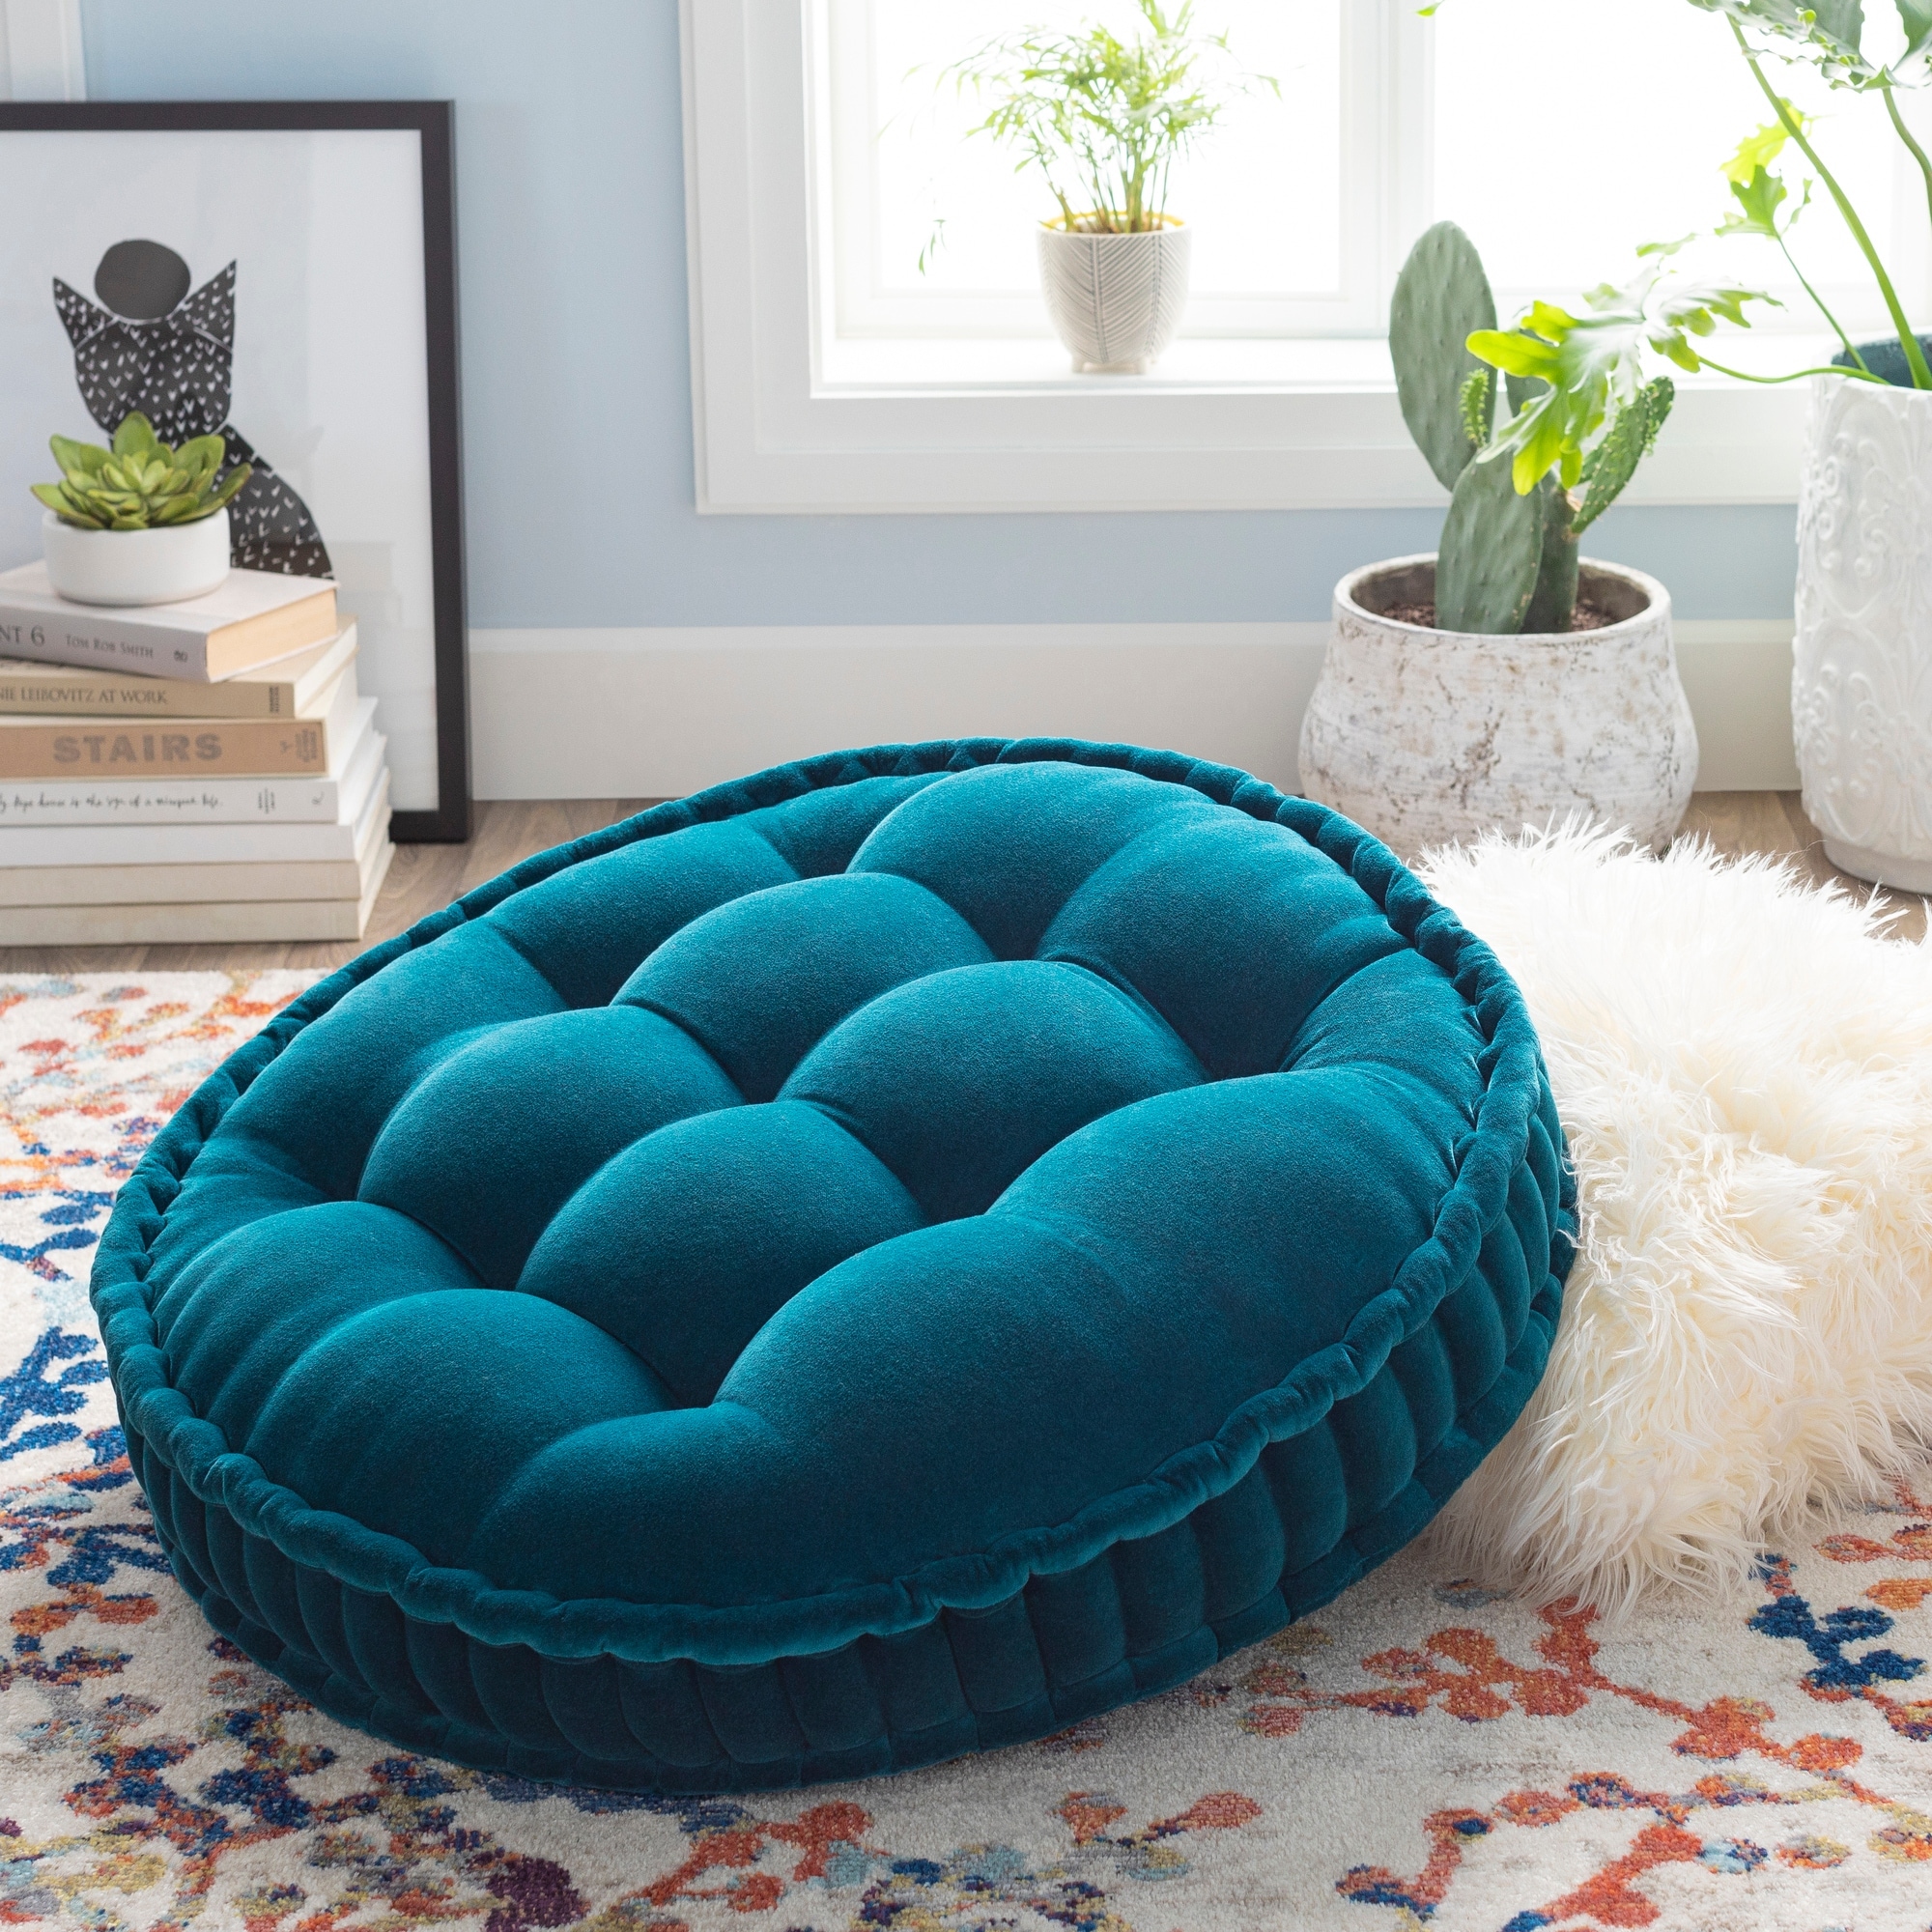 Velvet Pouf, Floor Cushion, French Mat, Square Meditation Cushion COLORS 